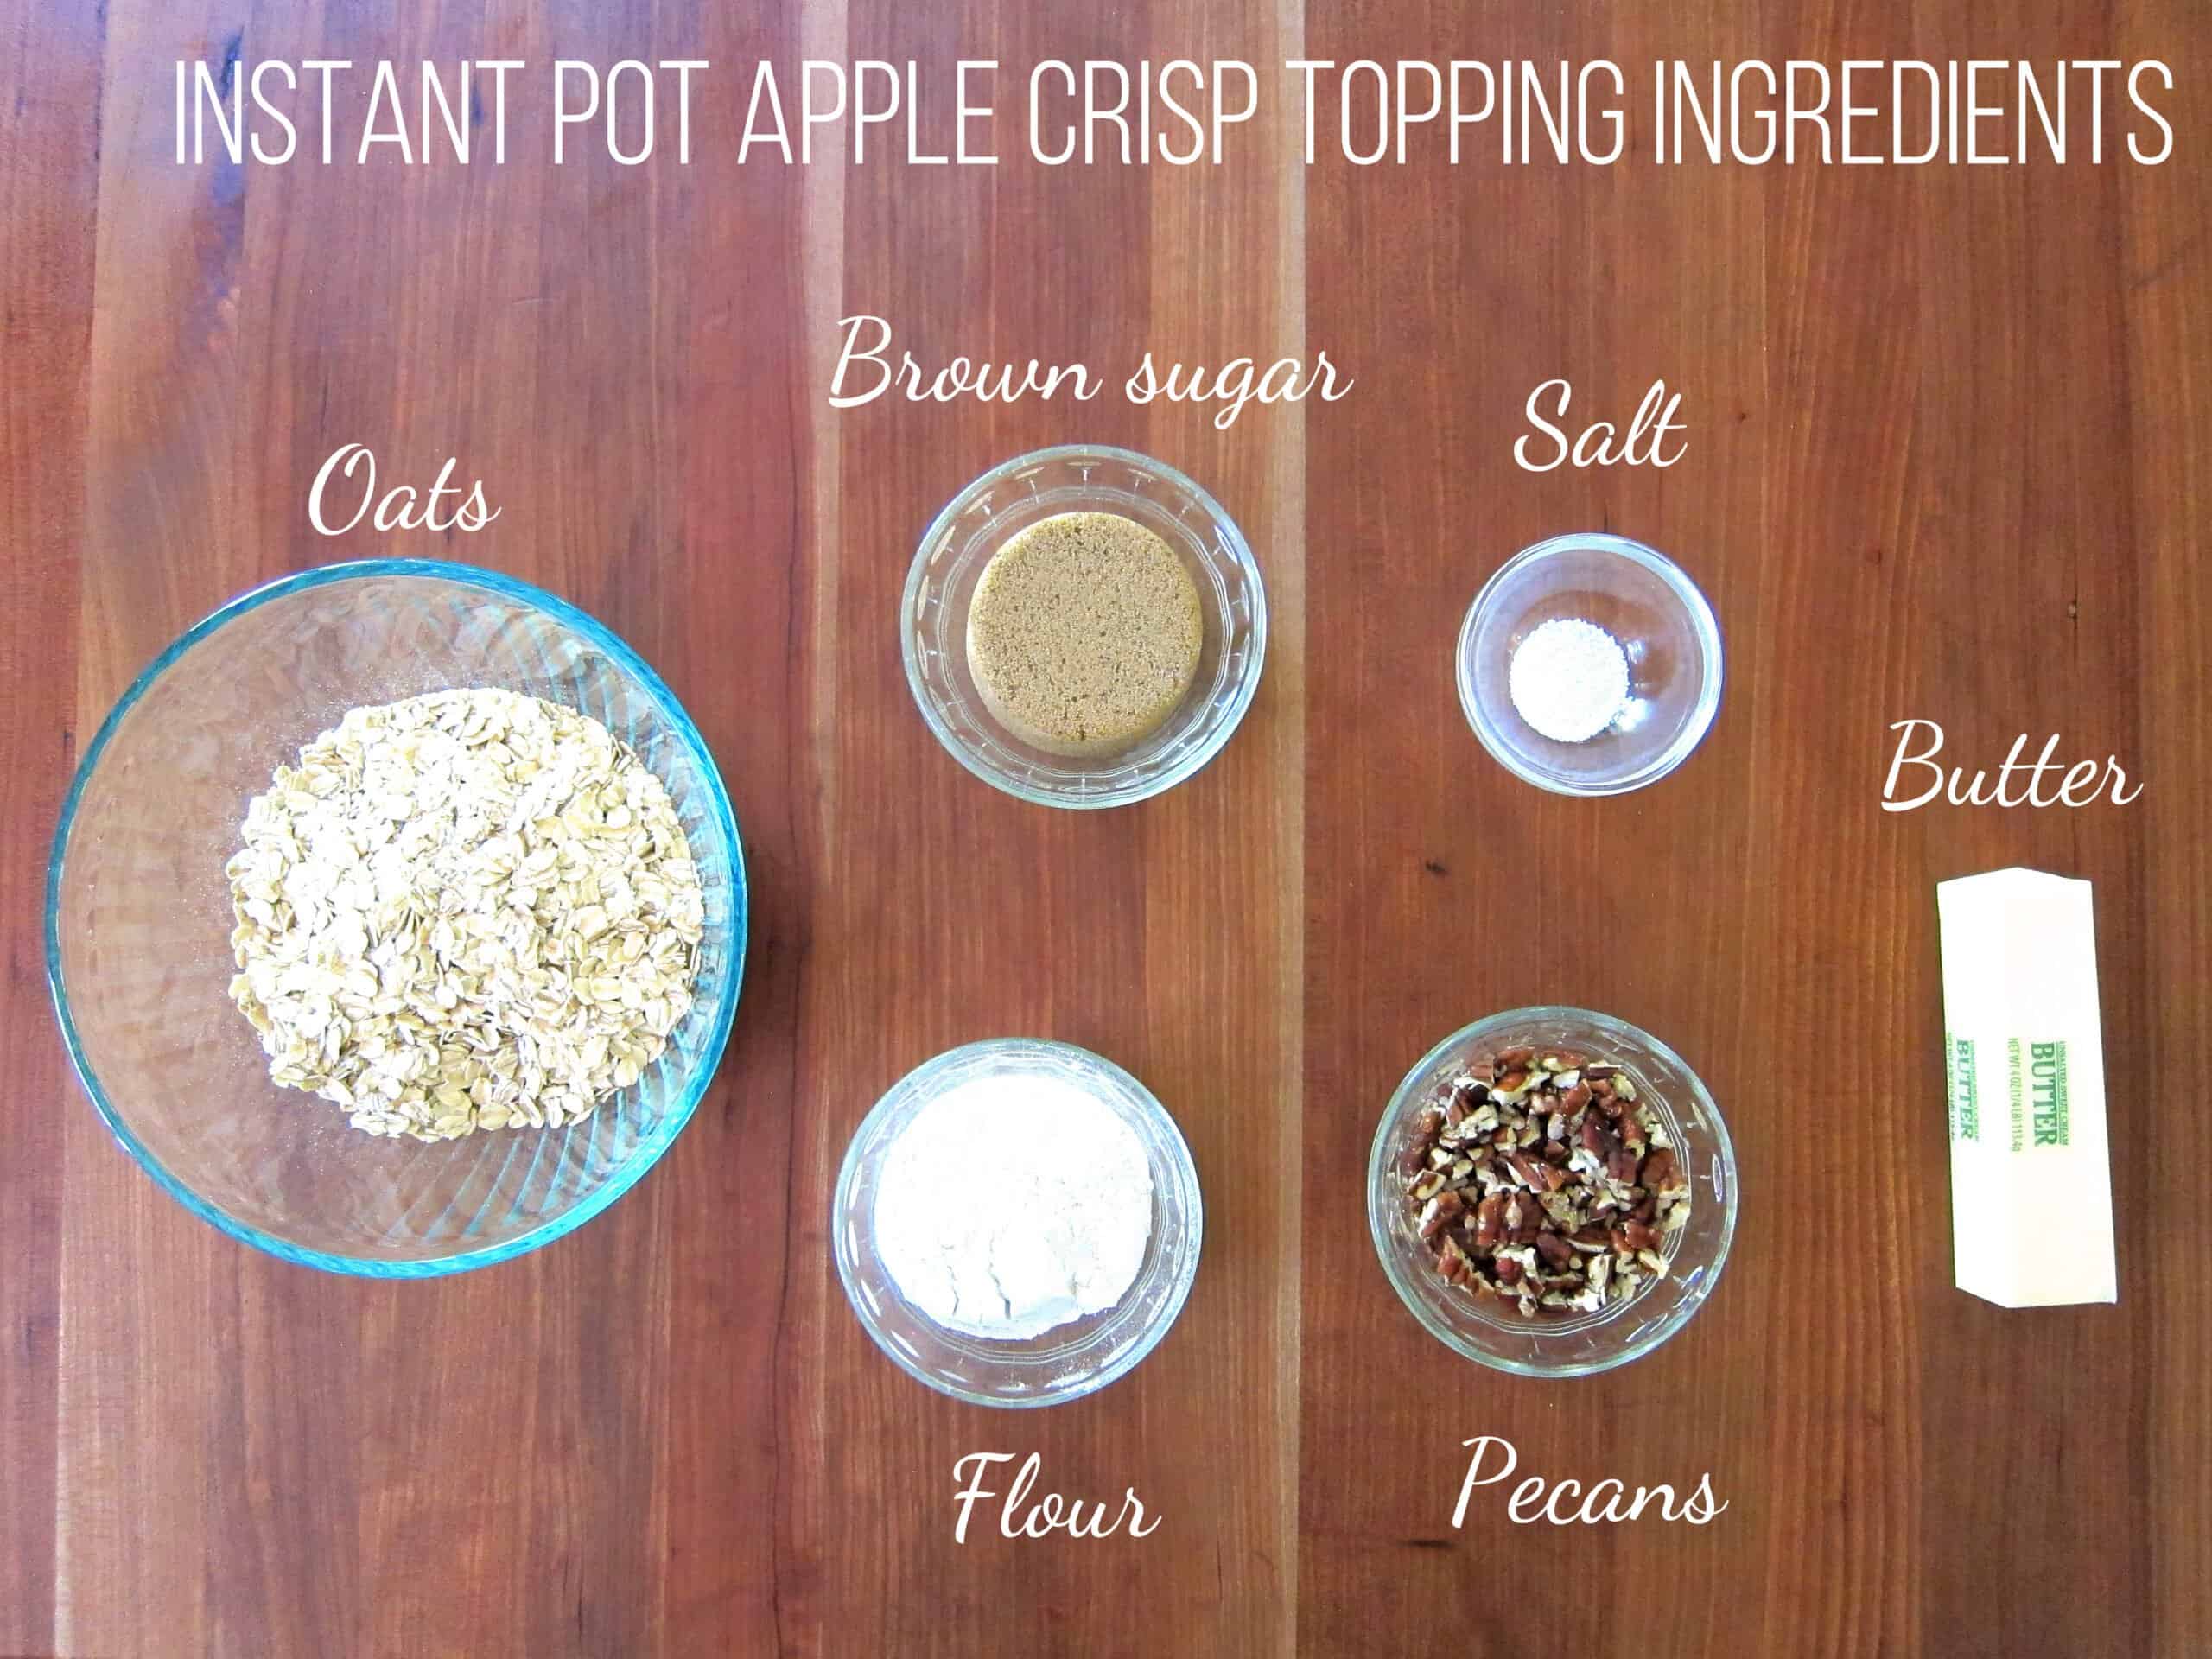 Instant Pot Apple Crisp Ingredients - oats, brown sugar, salt, flour, pecans, butter